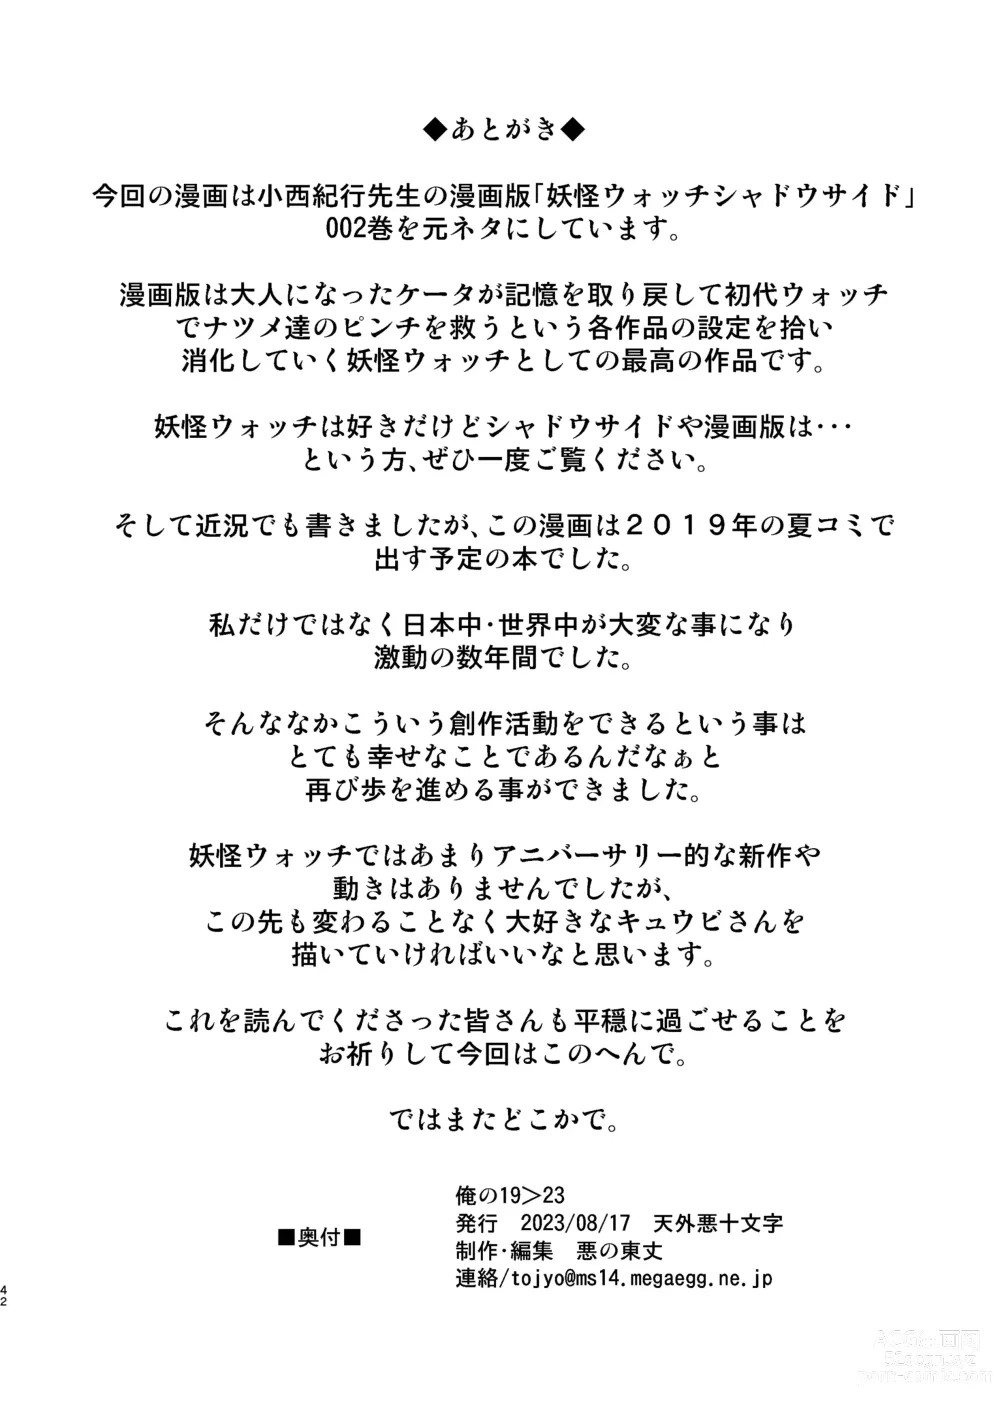 Page 42 of doujinshi Ore no 2019 > 2023